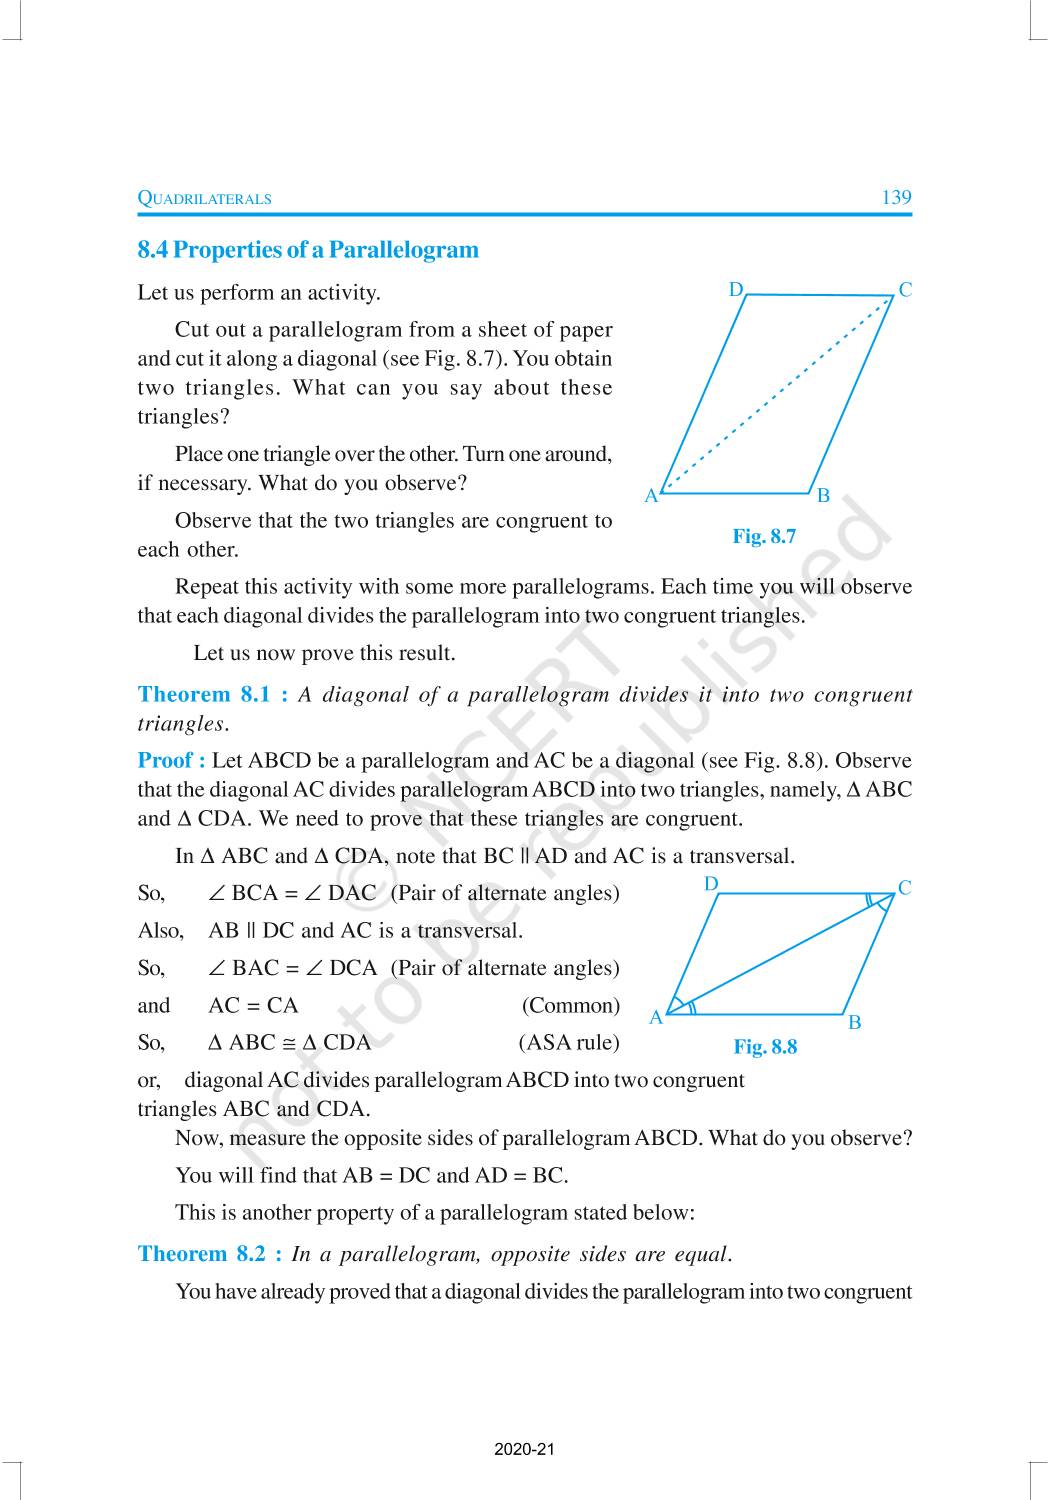 case study on quadrilaterals class 9